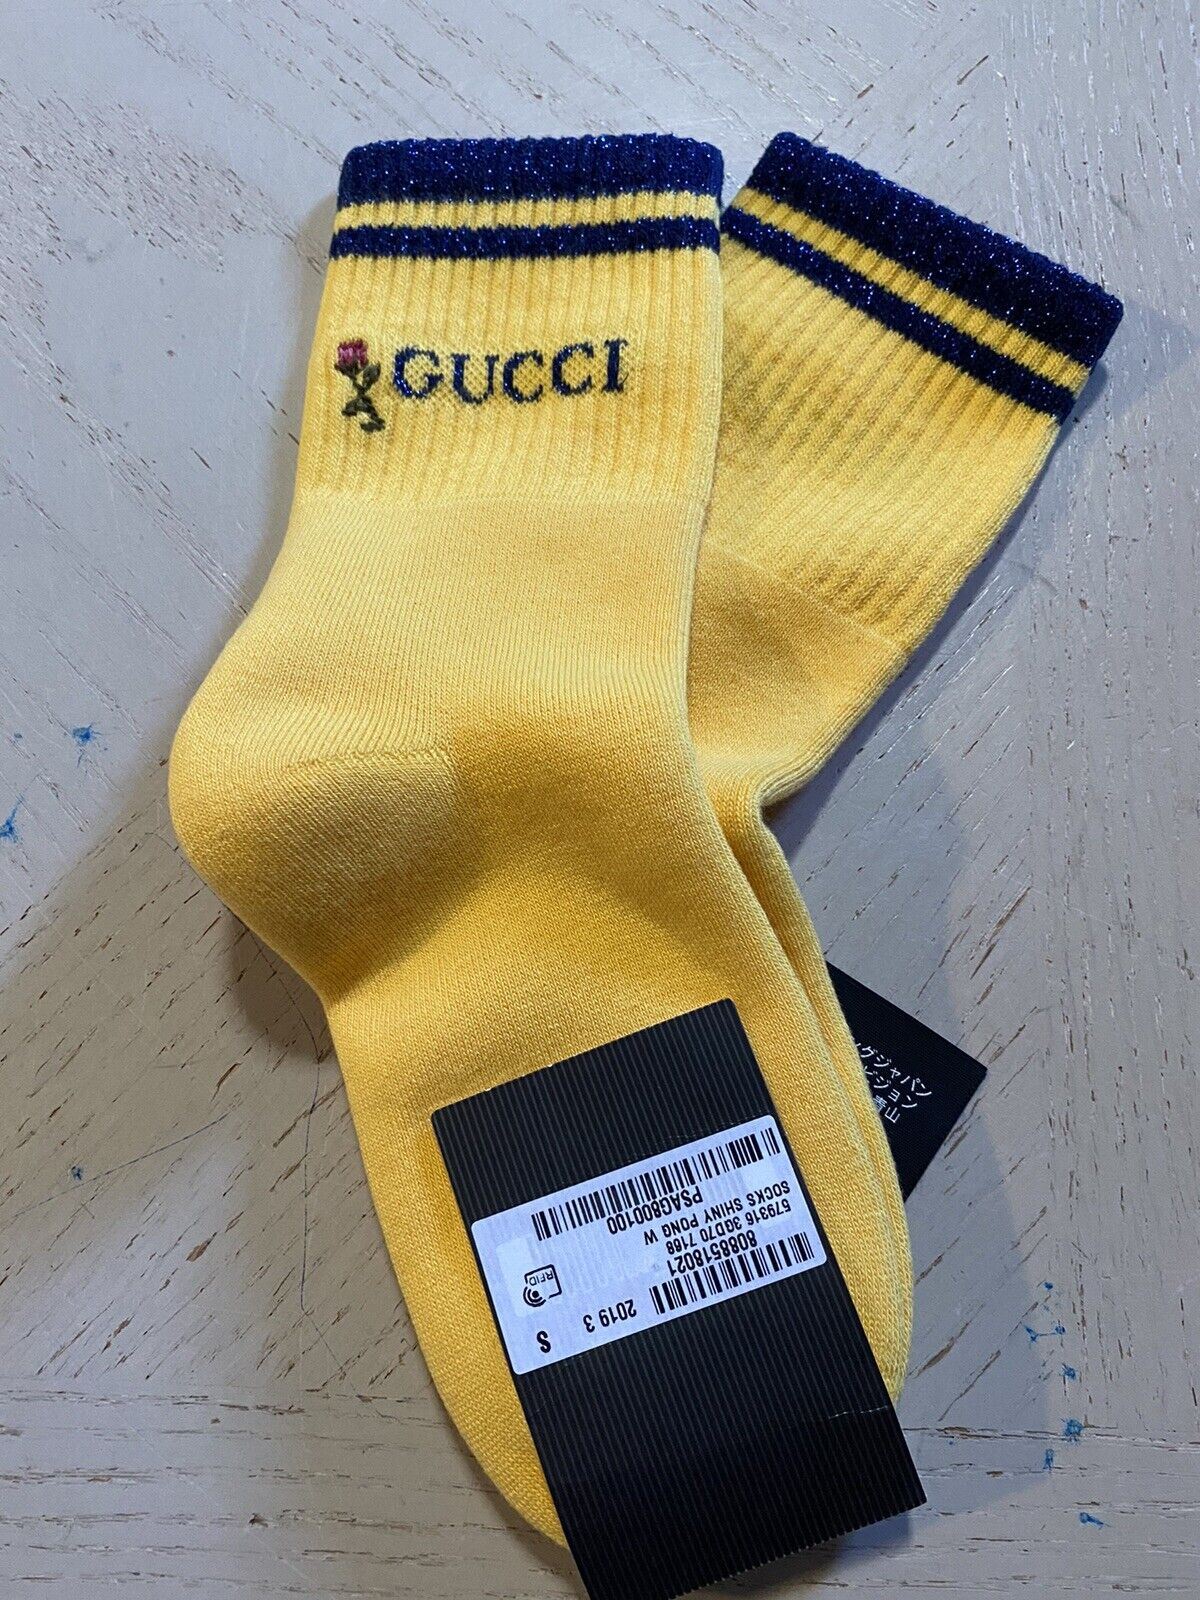 Мини-носки греческого цвета NWT Gucci с монограммой Gucci, желтые, размер S, Италия